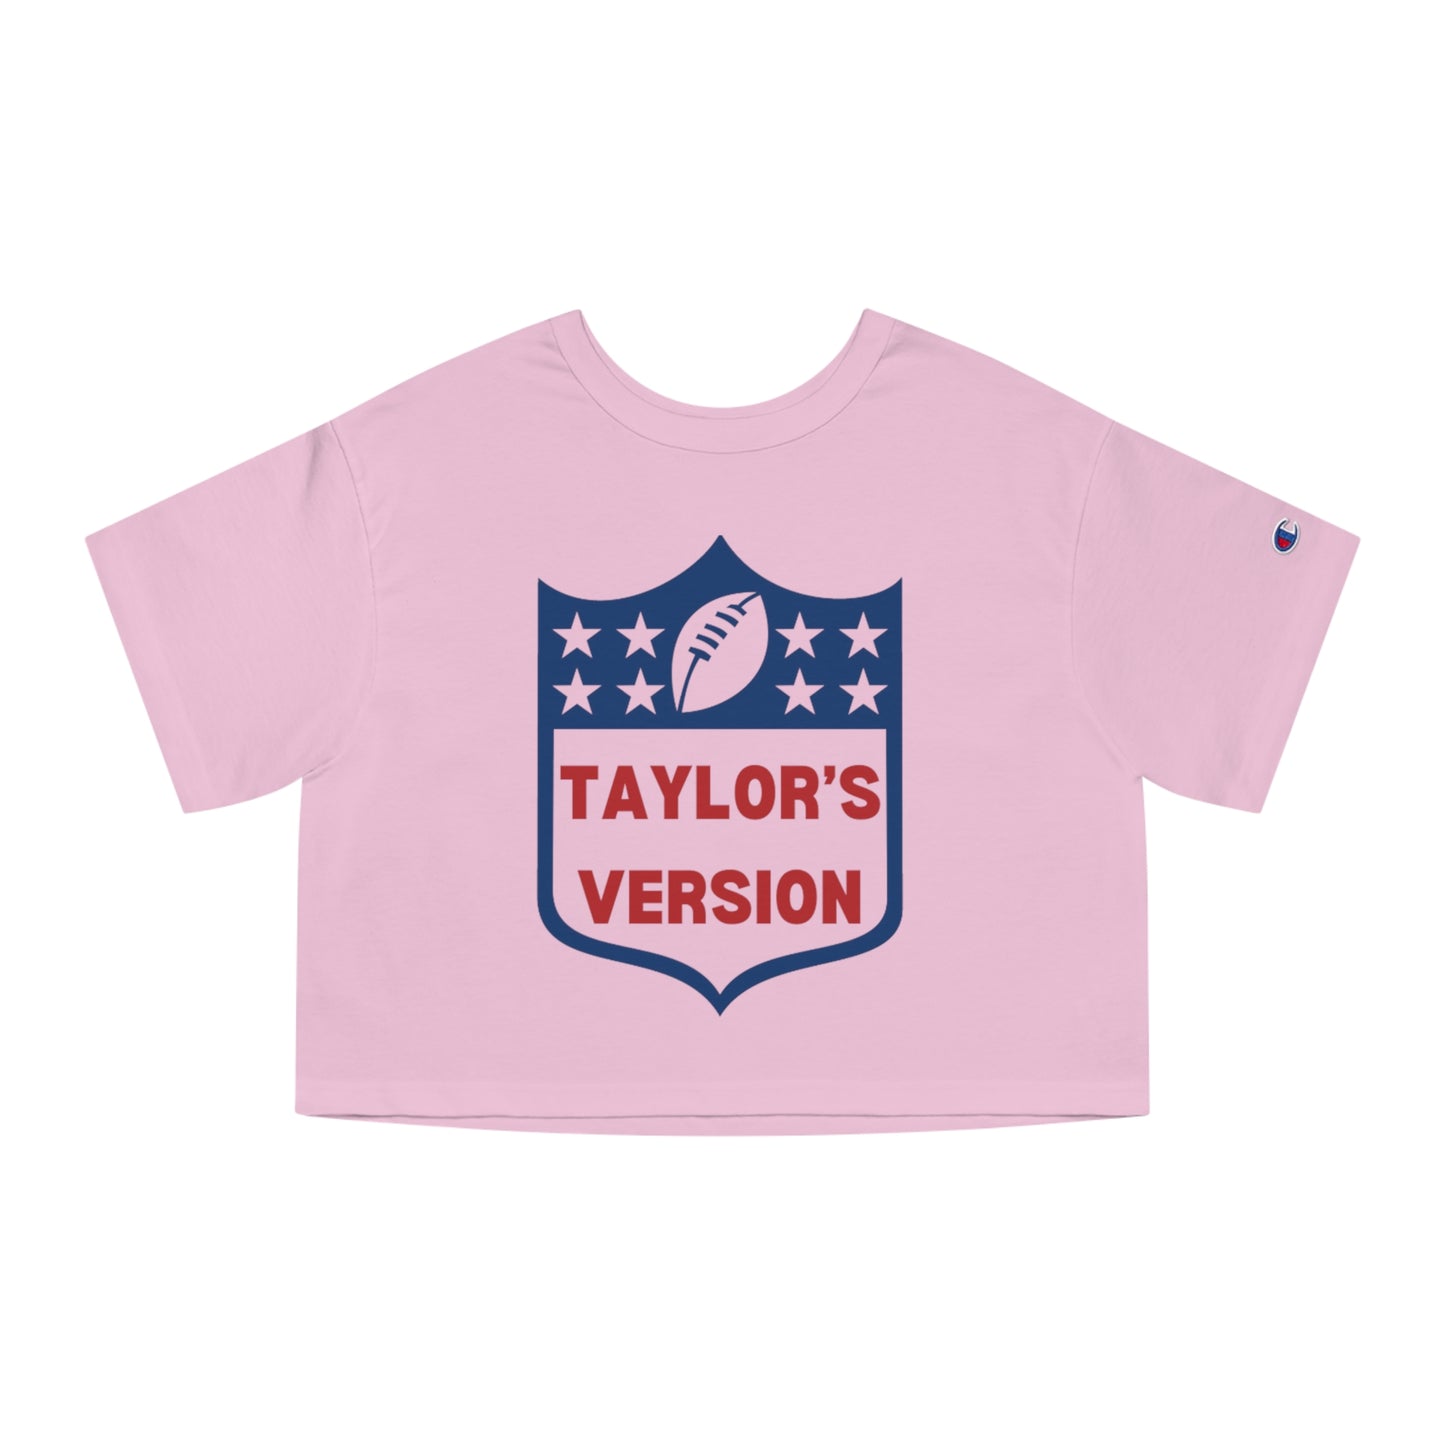 "Taylor's Version" - Champion™ crop top